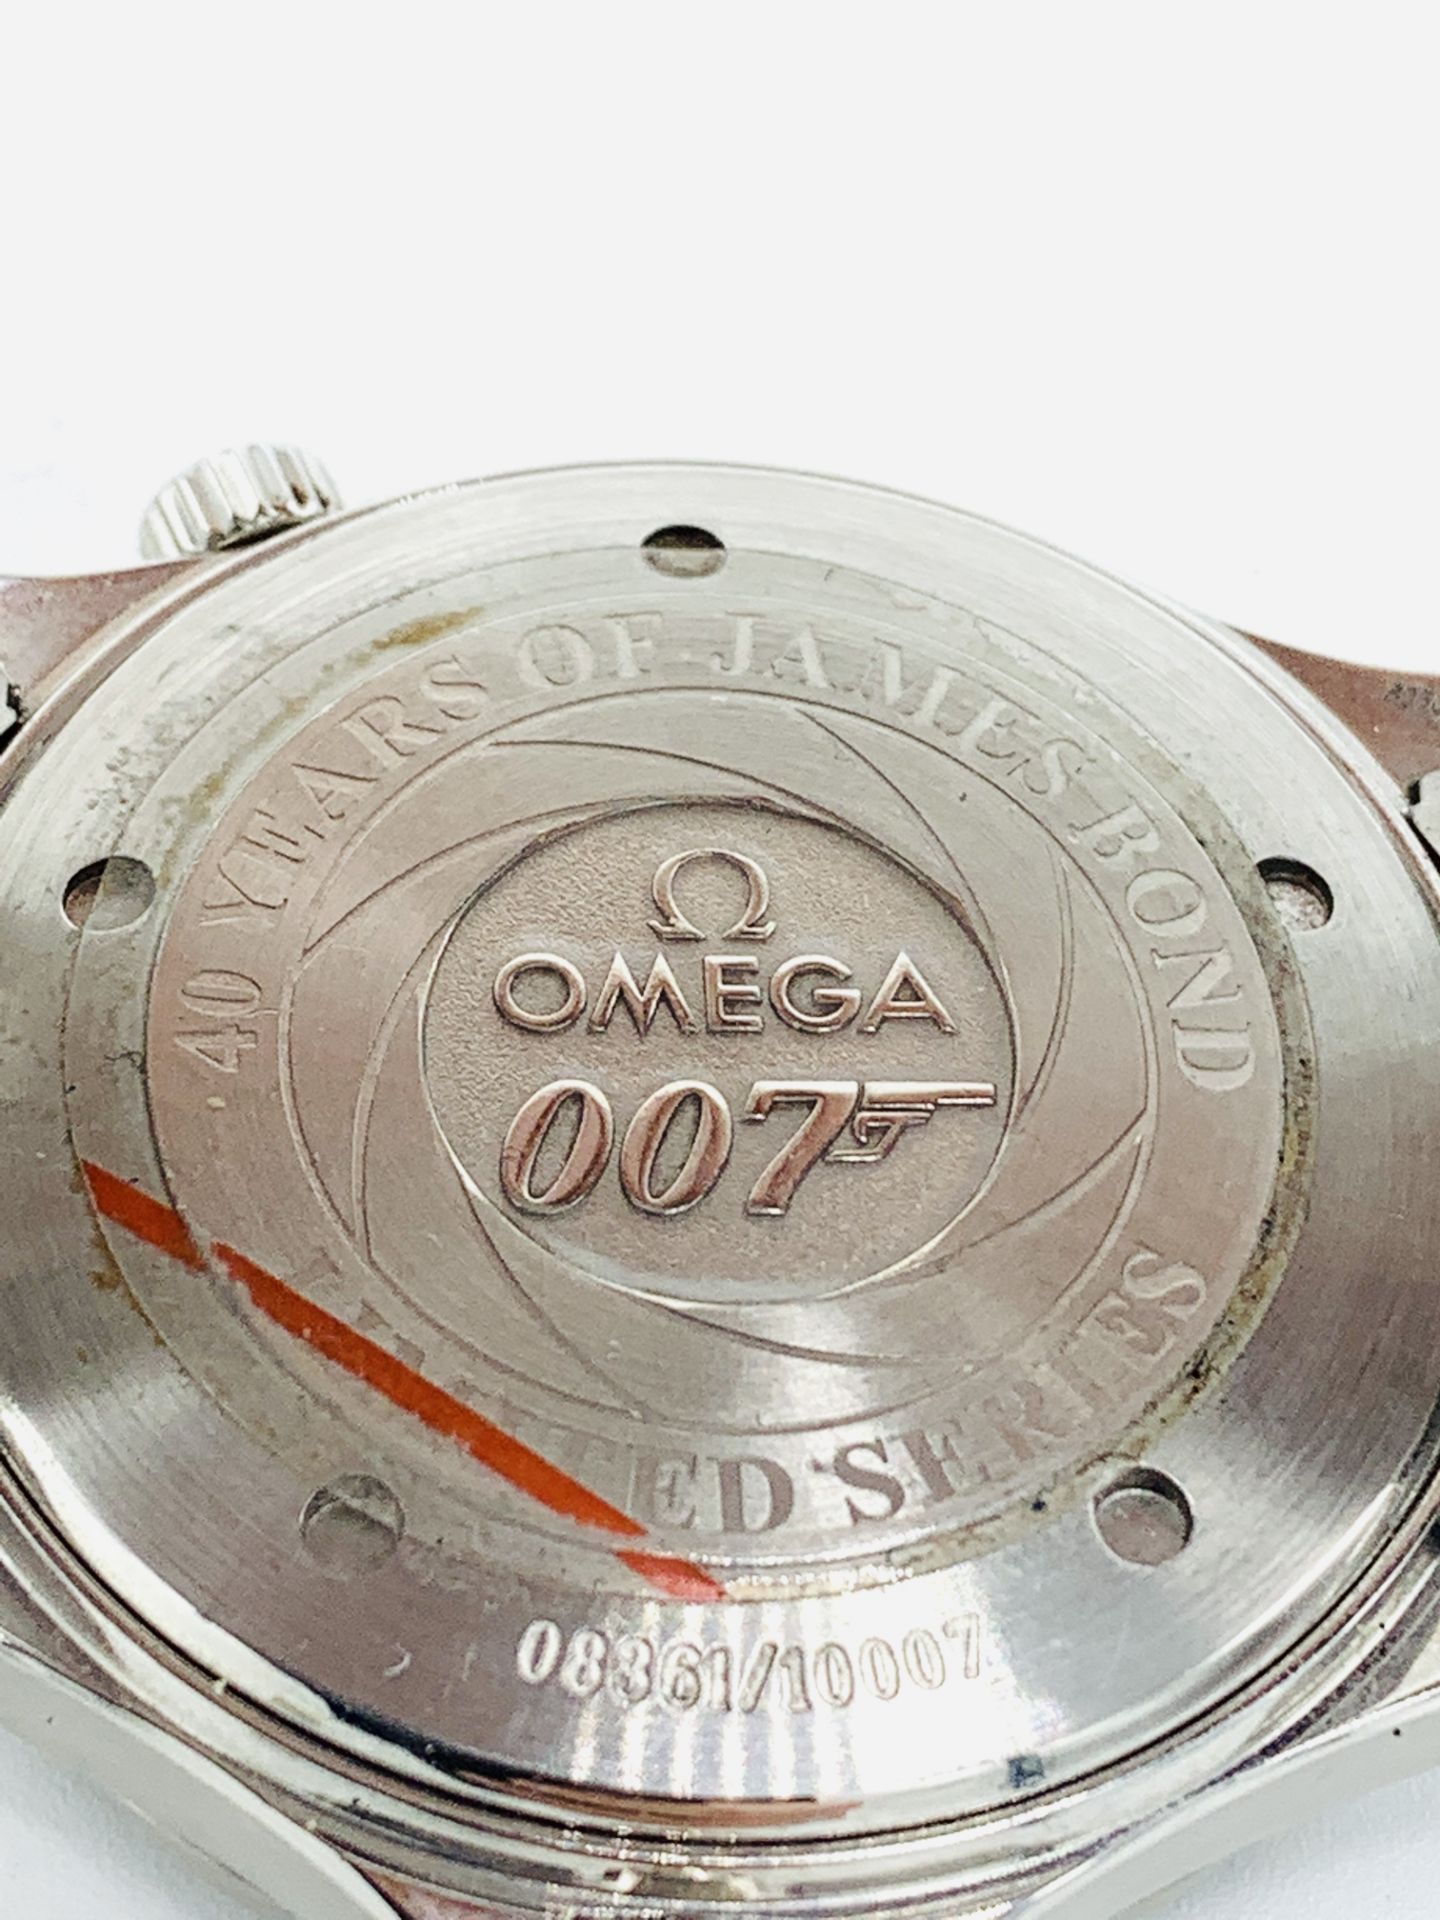 Omega Seamaster Professional Chronometer "40 years of James Bond" Limited Series - Image 5 of 10